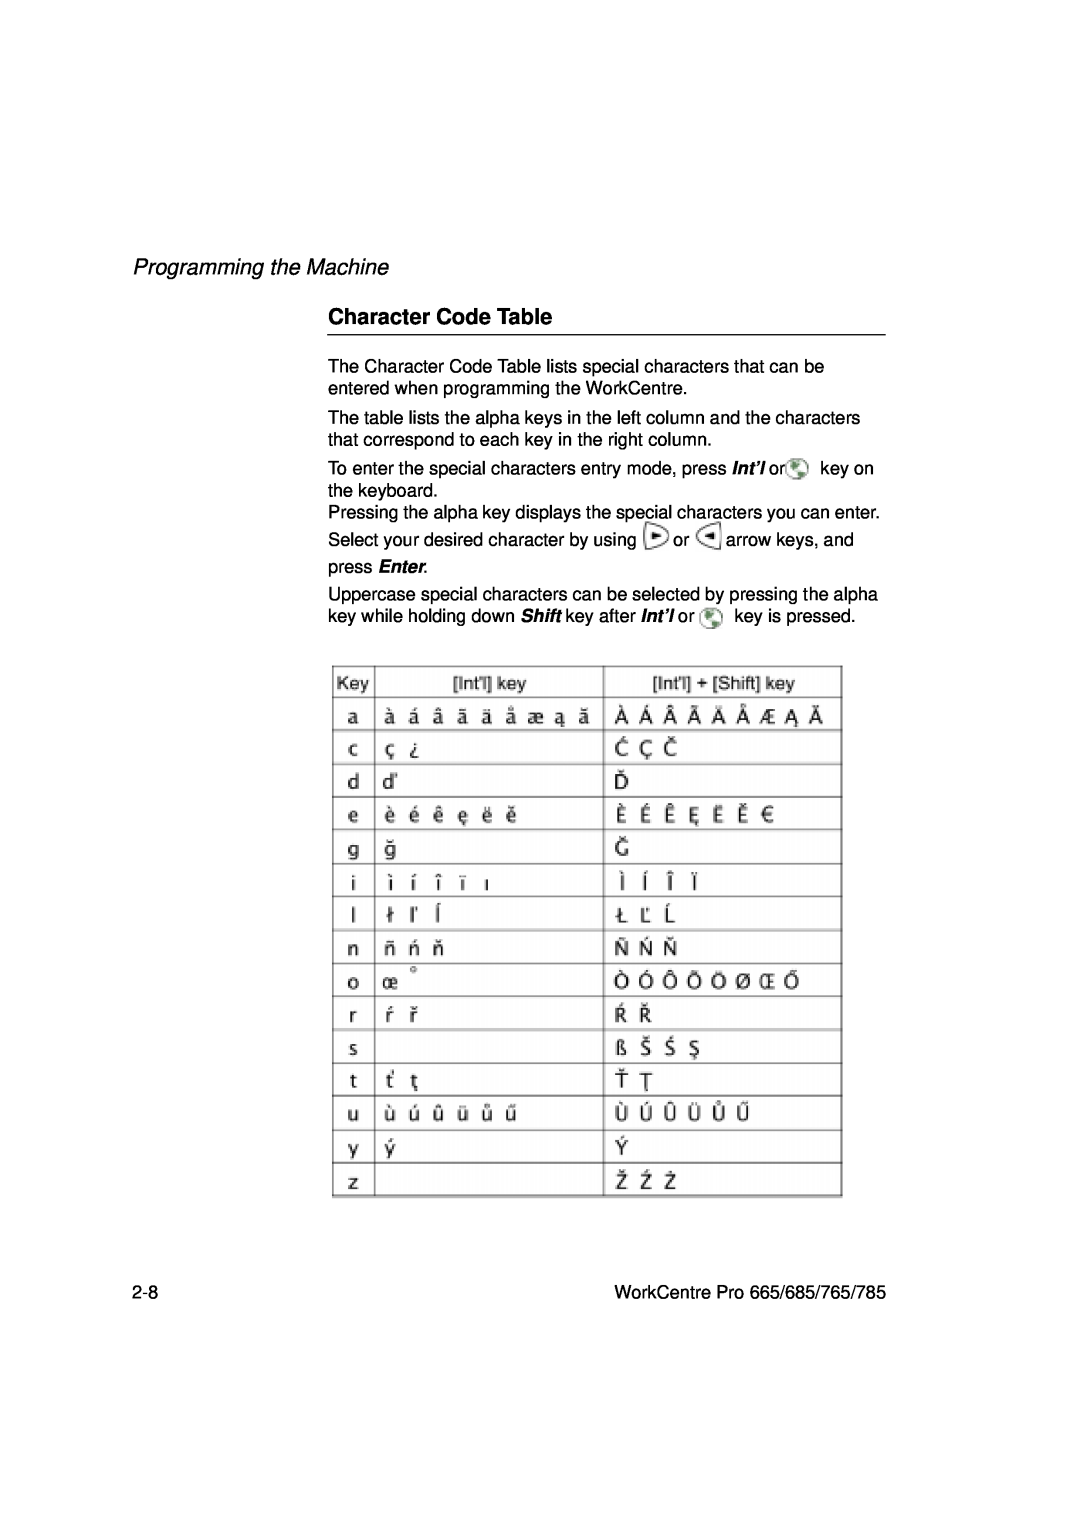 Xerox 765, 665, 685, 785 manual Character Code Table, Programming the Machine 